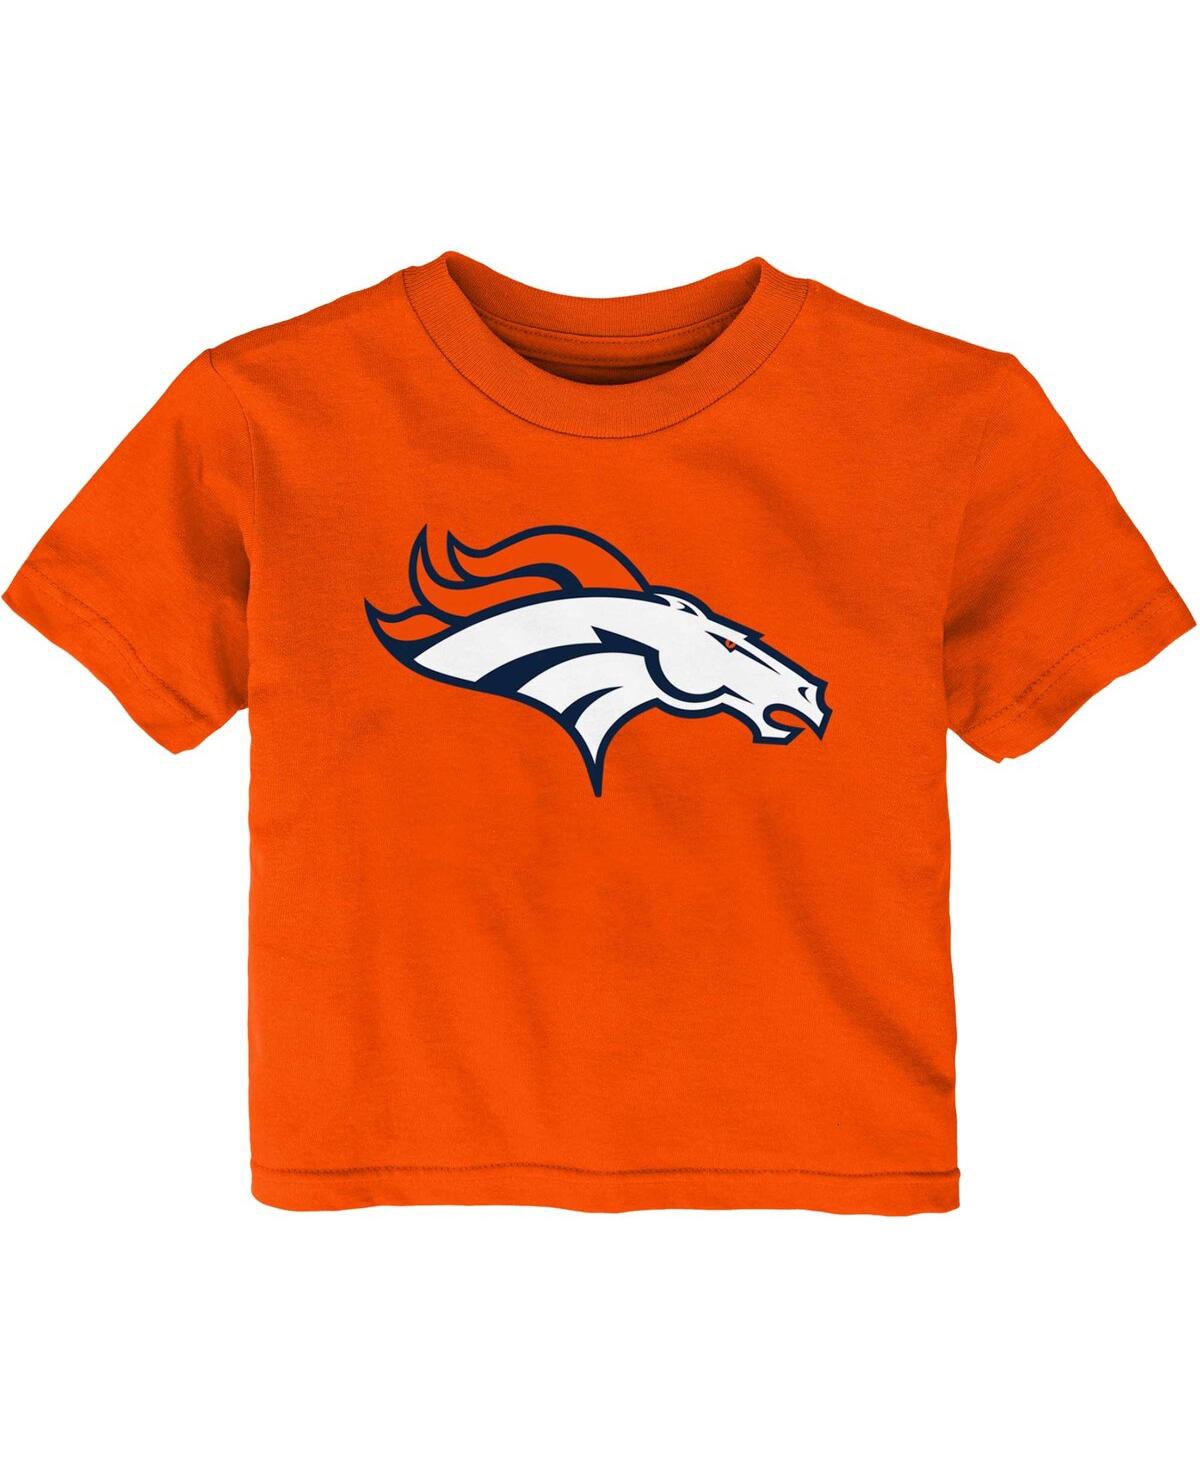 Outerstuff Baby Boys And Girls Orange Denver Broncos Primary Logo T-shirt